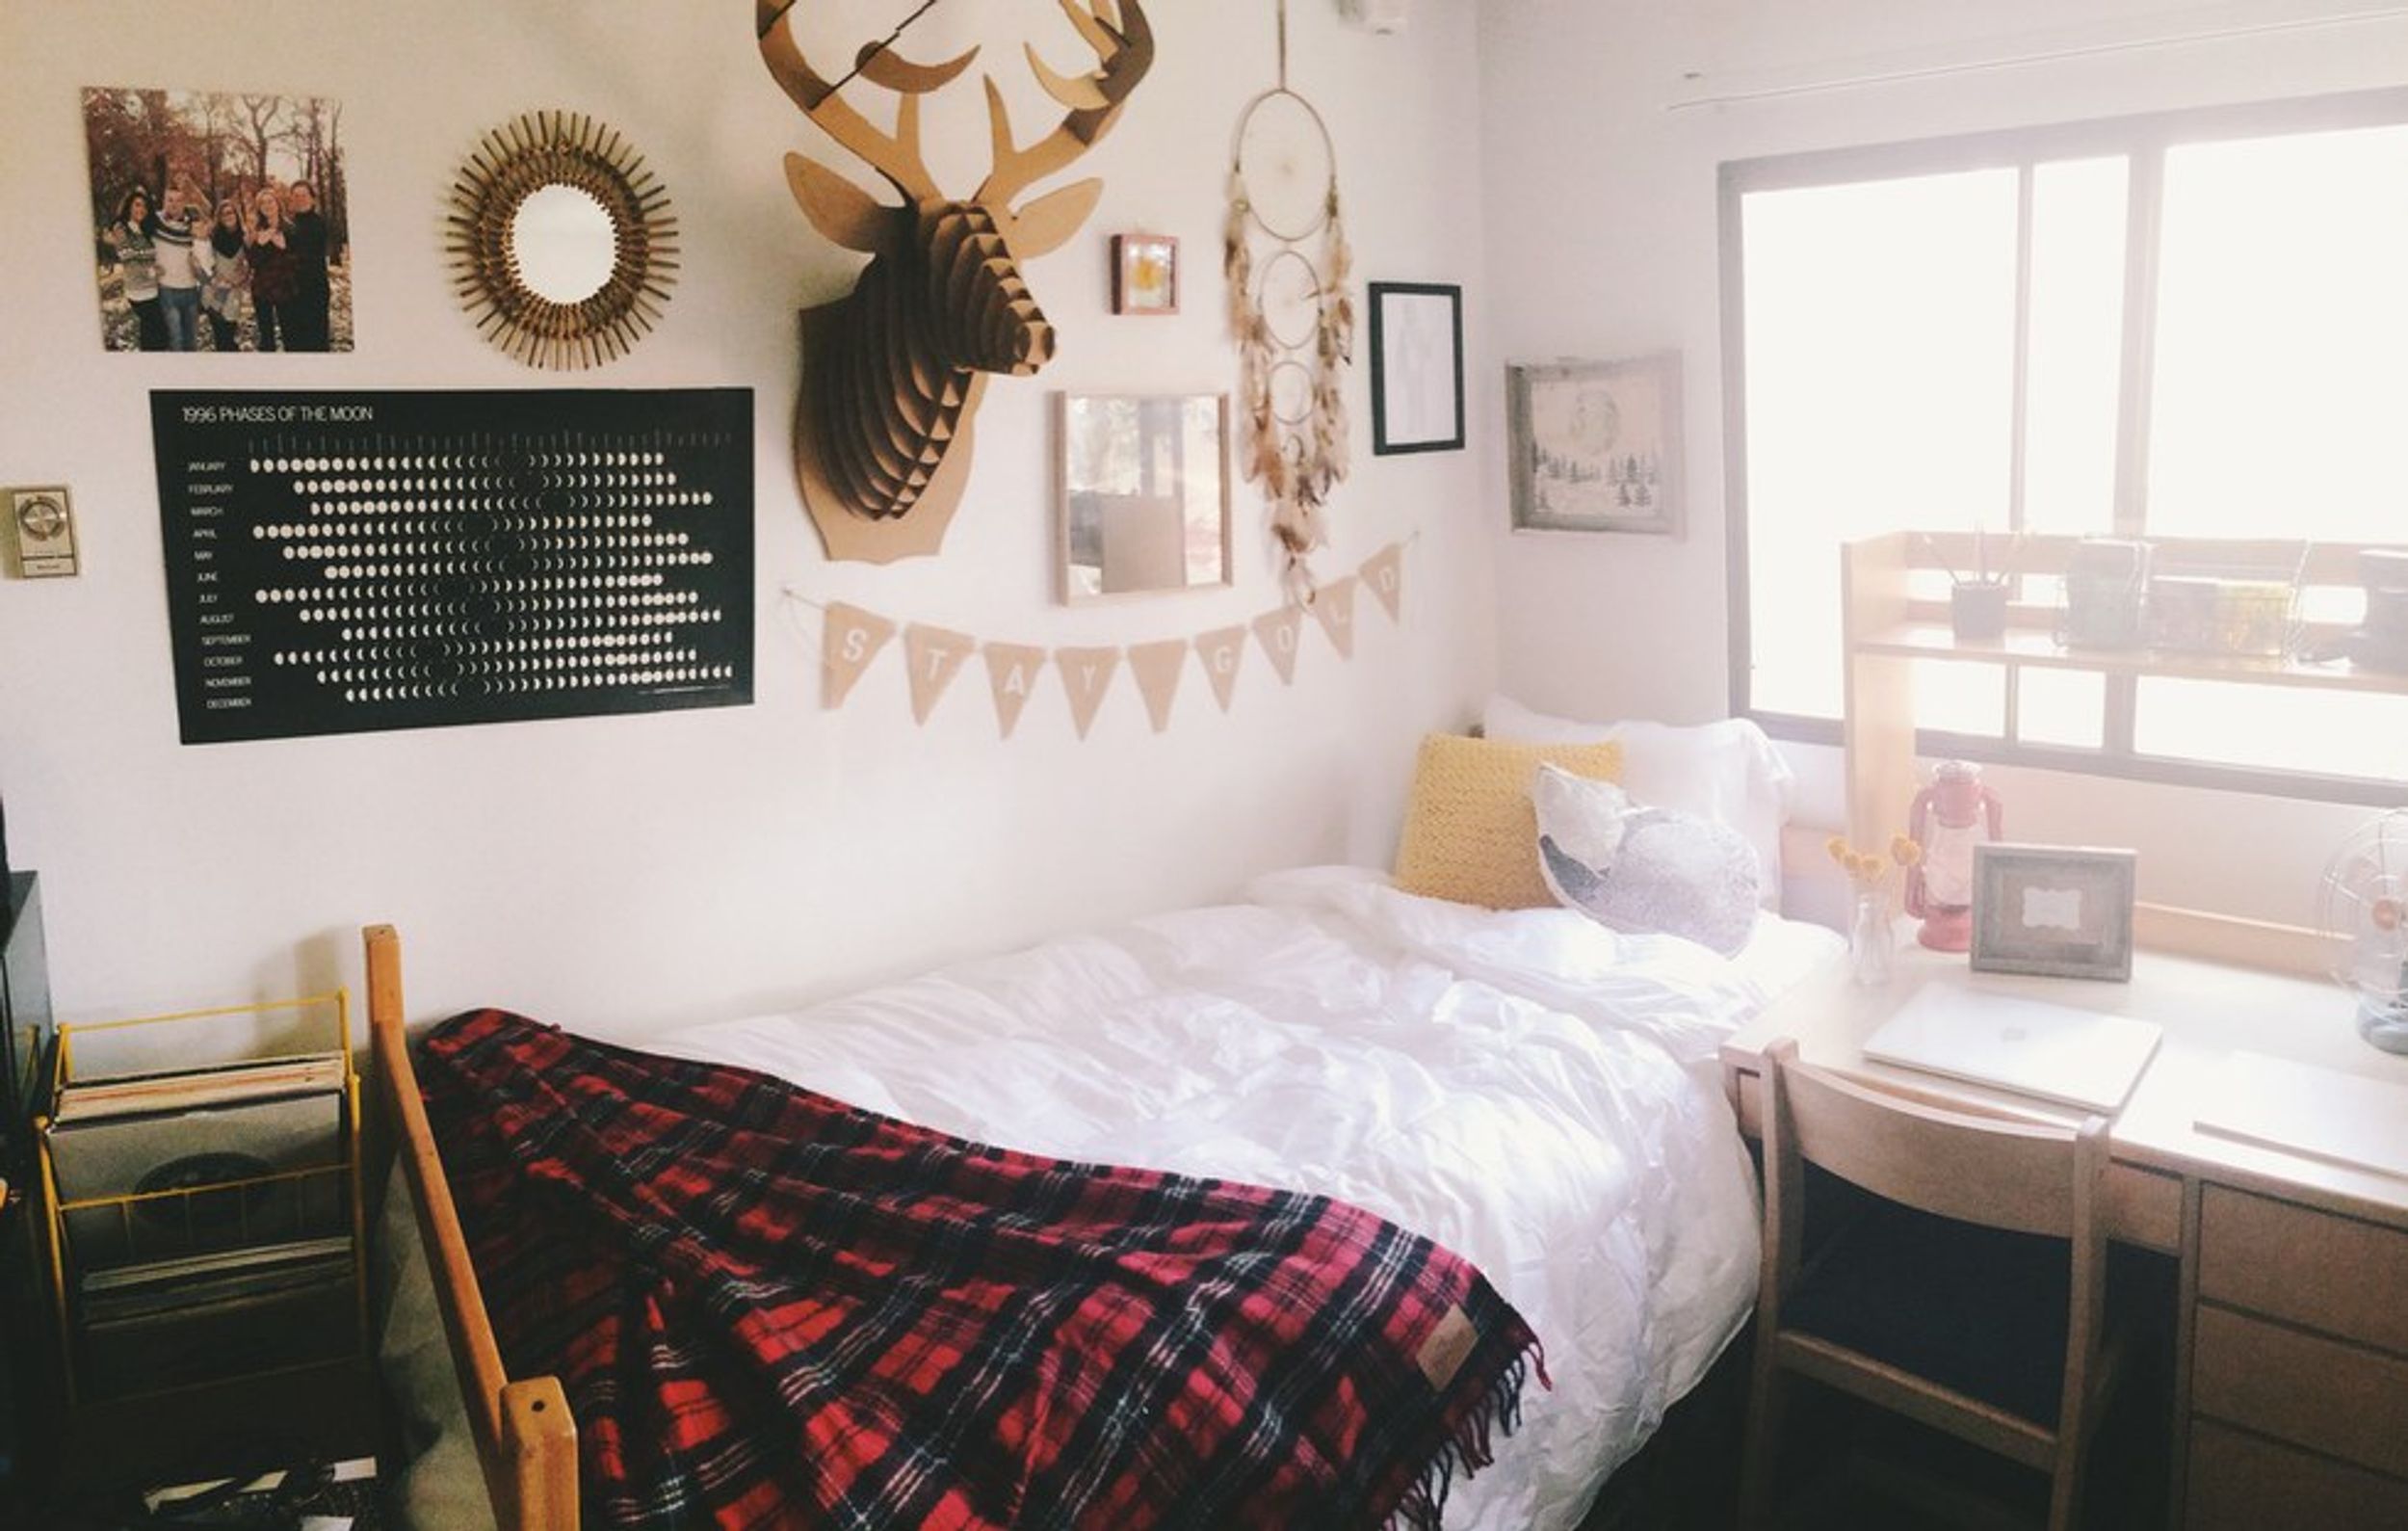 10 Ways to Make Your Dorm Room More Cozy